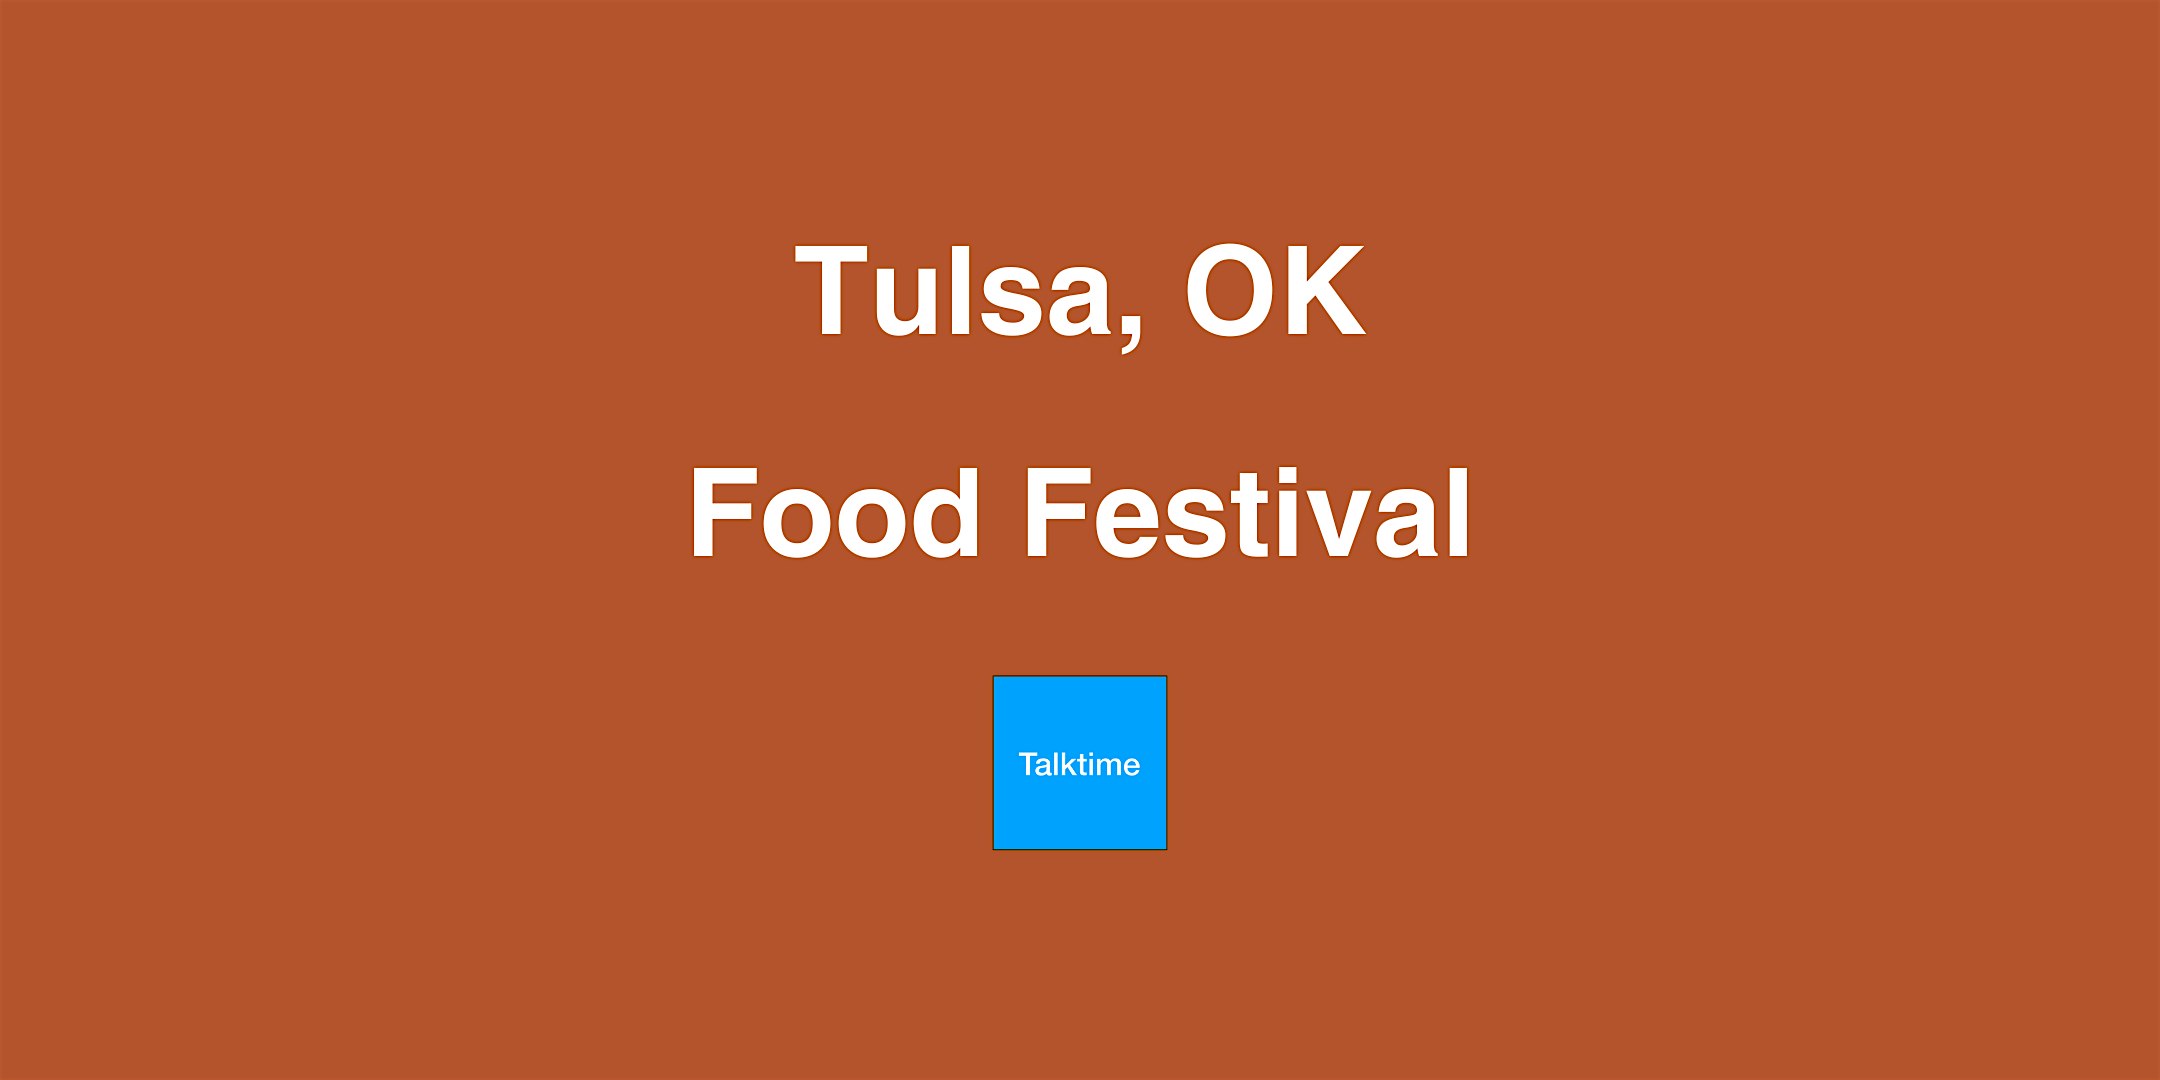 Food Festival - Tulsa